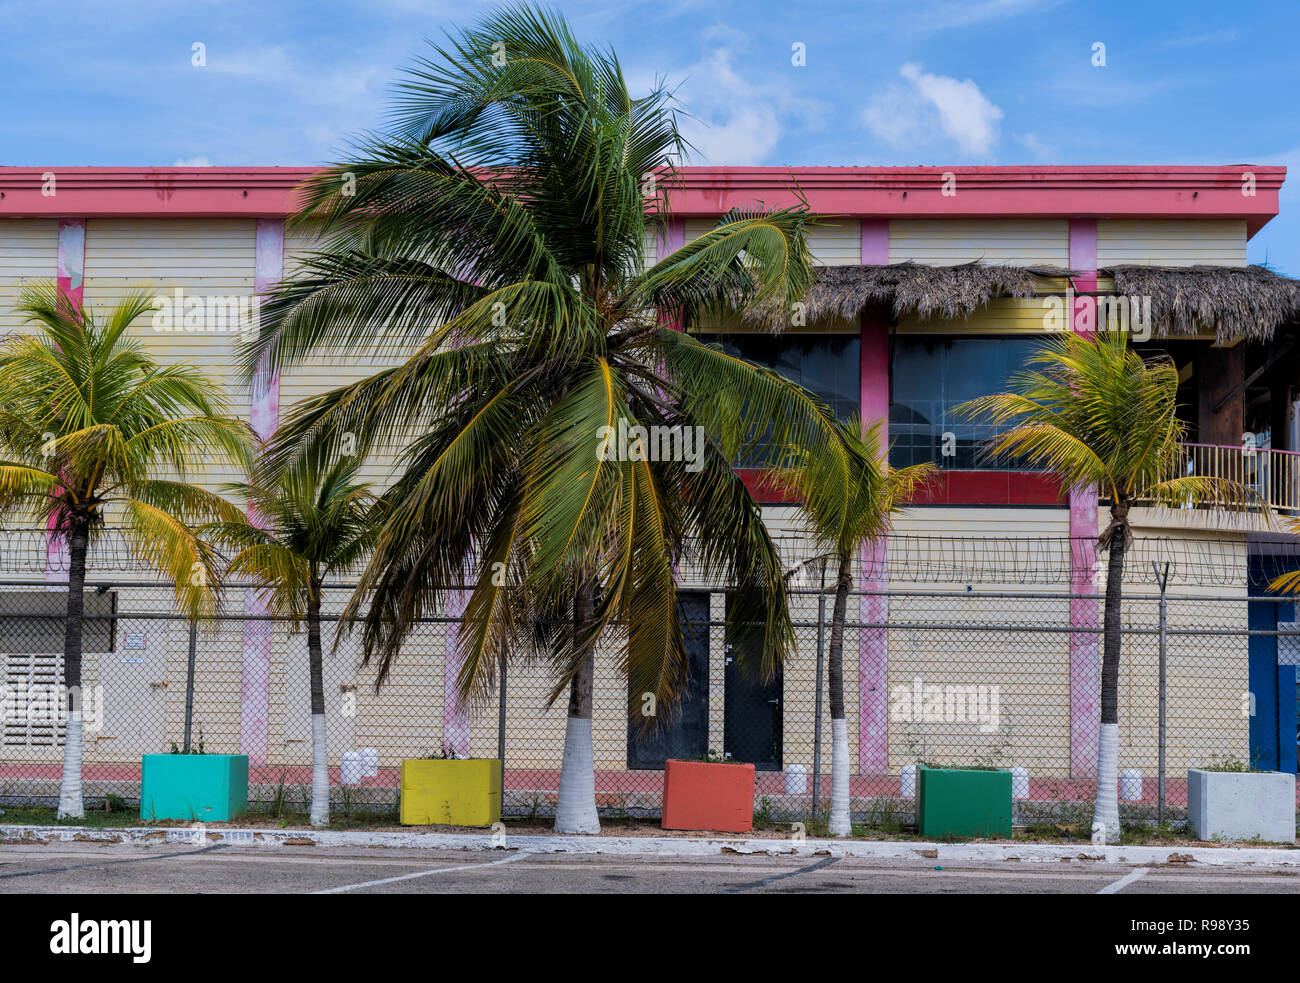 Oranjestad Port palm trees and colourful plant pots Aruba Stock Photo